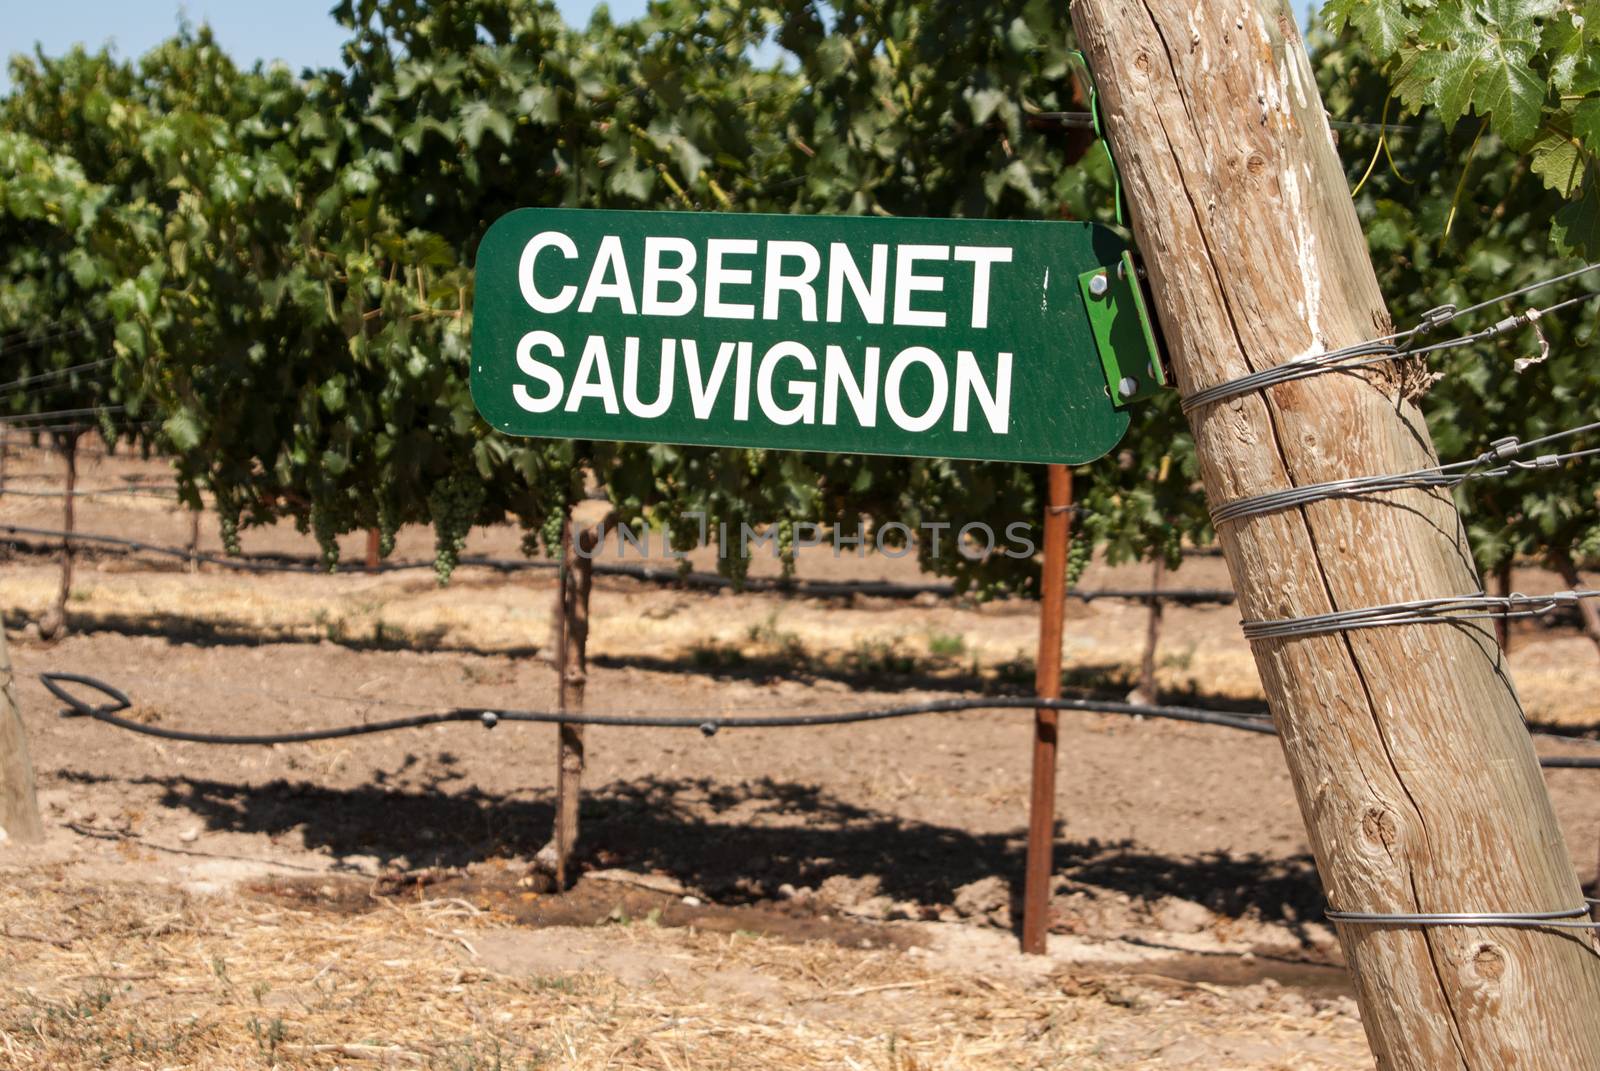 Vineyard sign for Cabernet Sauvignon grapes on the vine by emattil